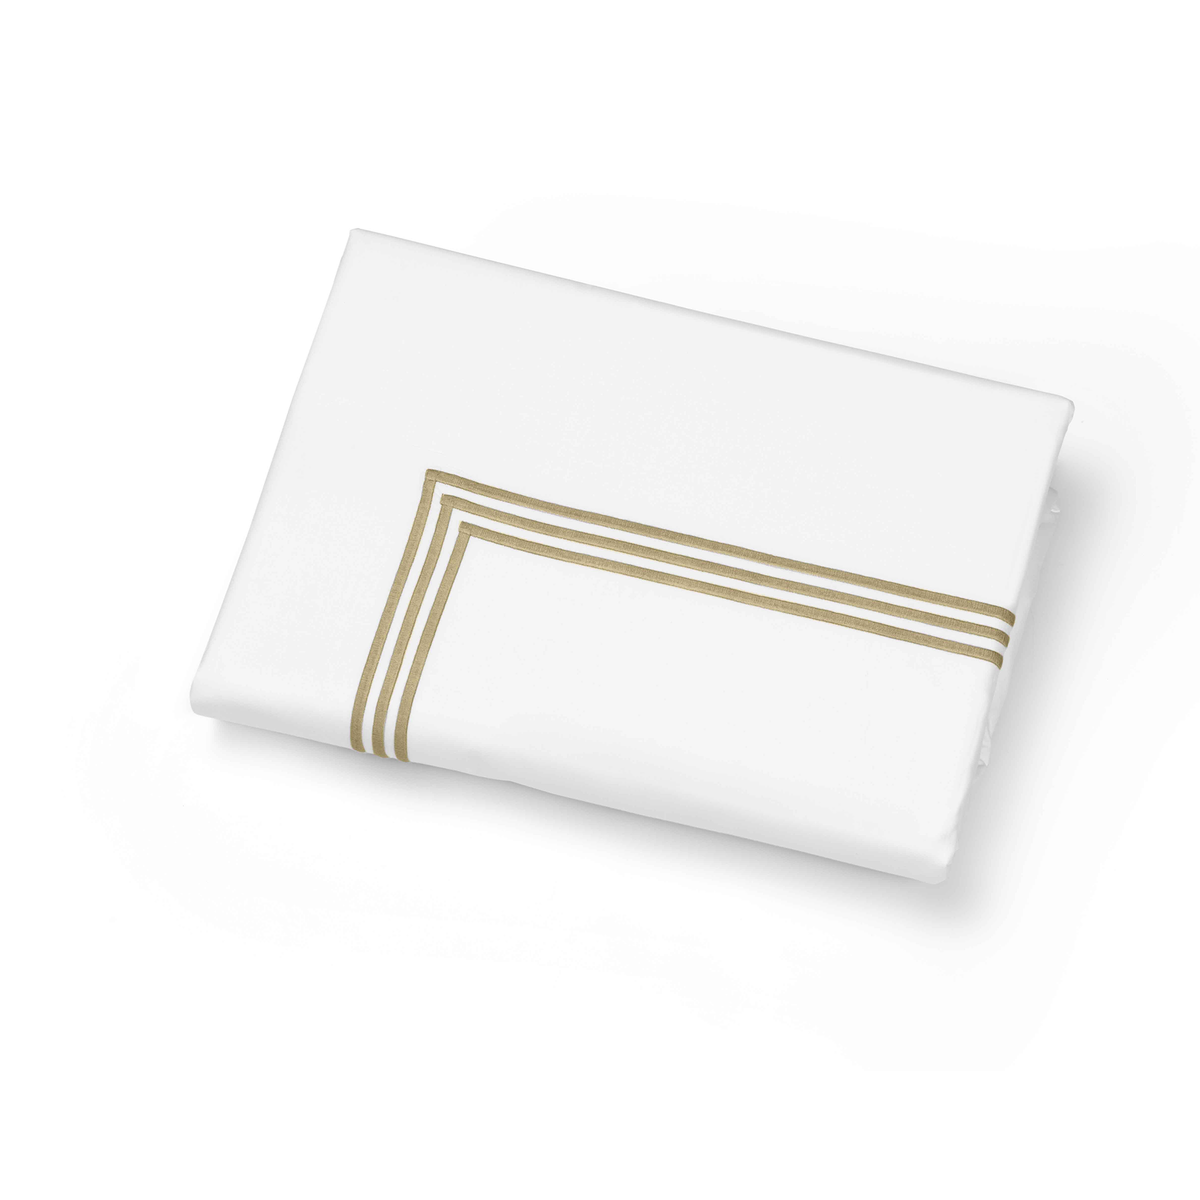 Folded Duvet Cover of Signoria Platinum Percale Bedding in White/Coffee Color